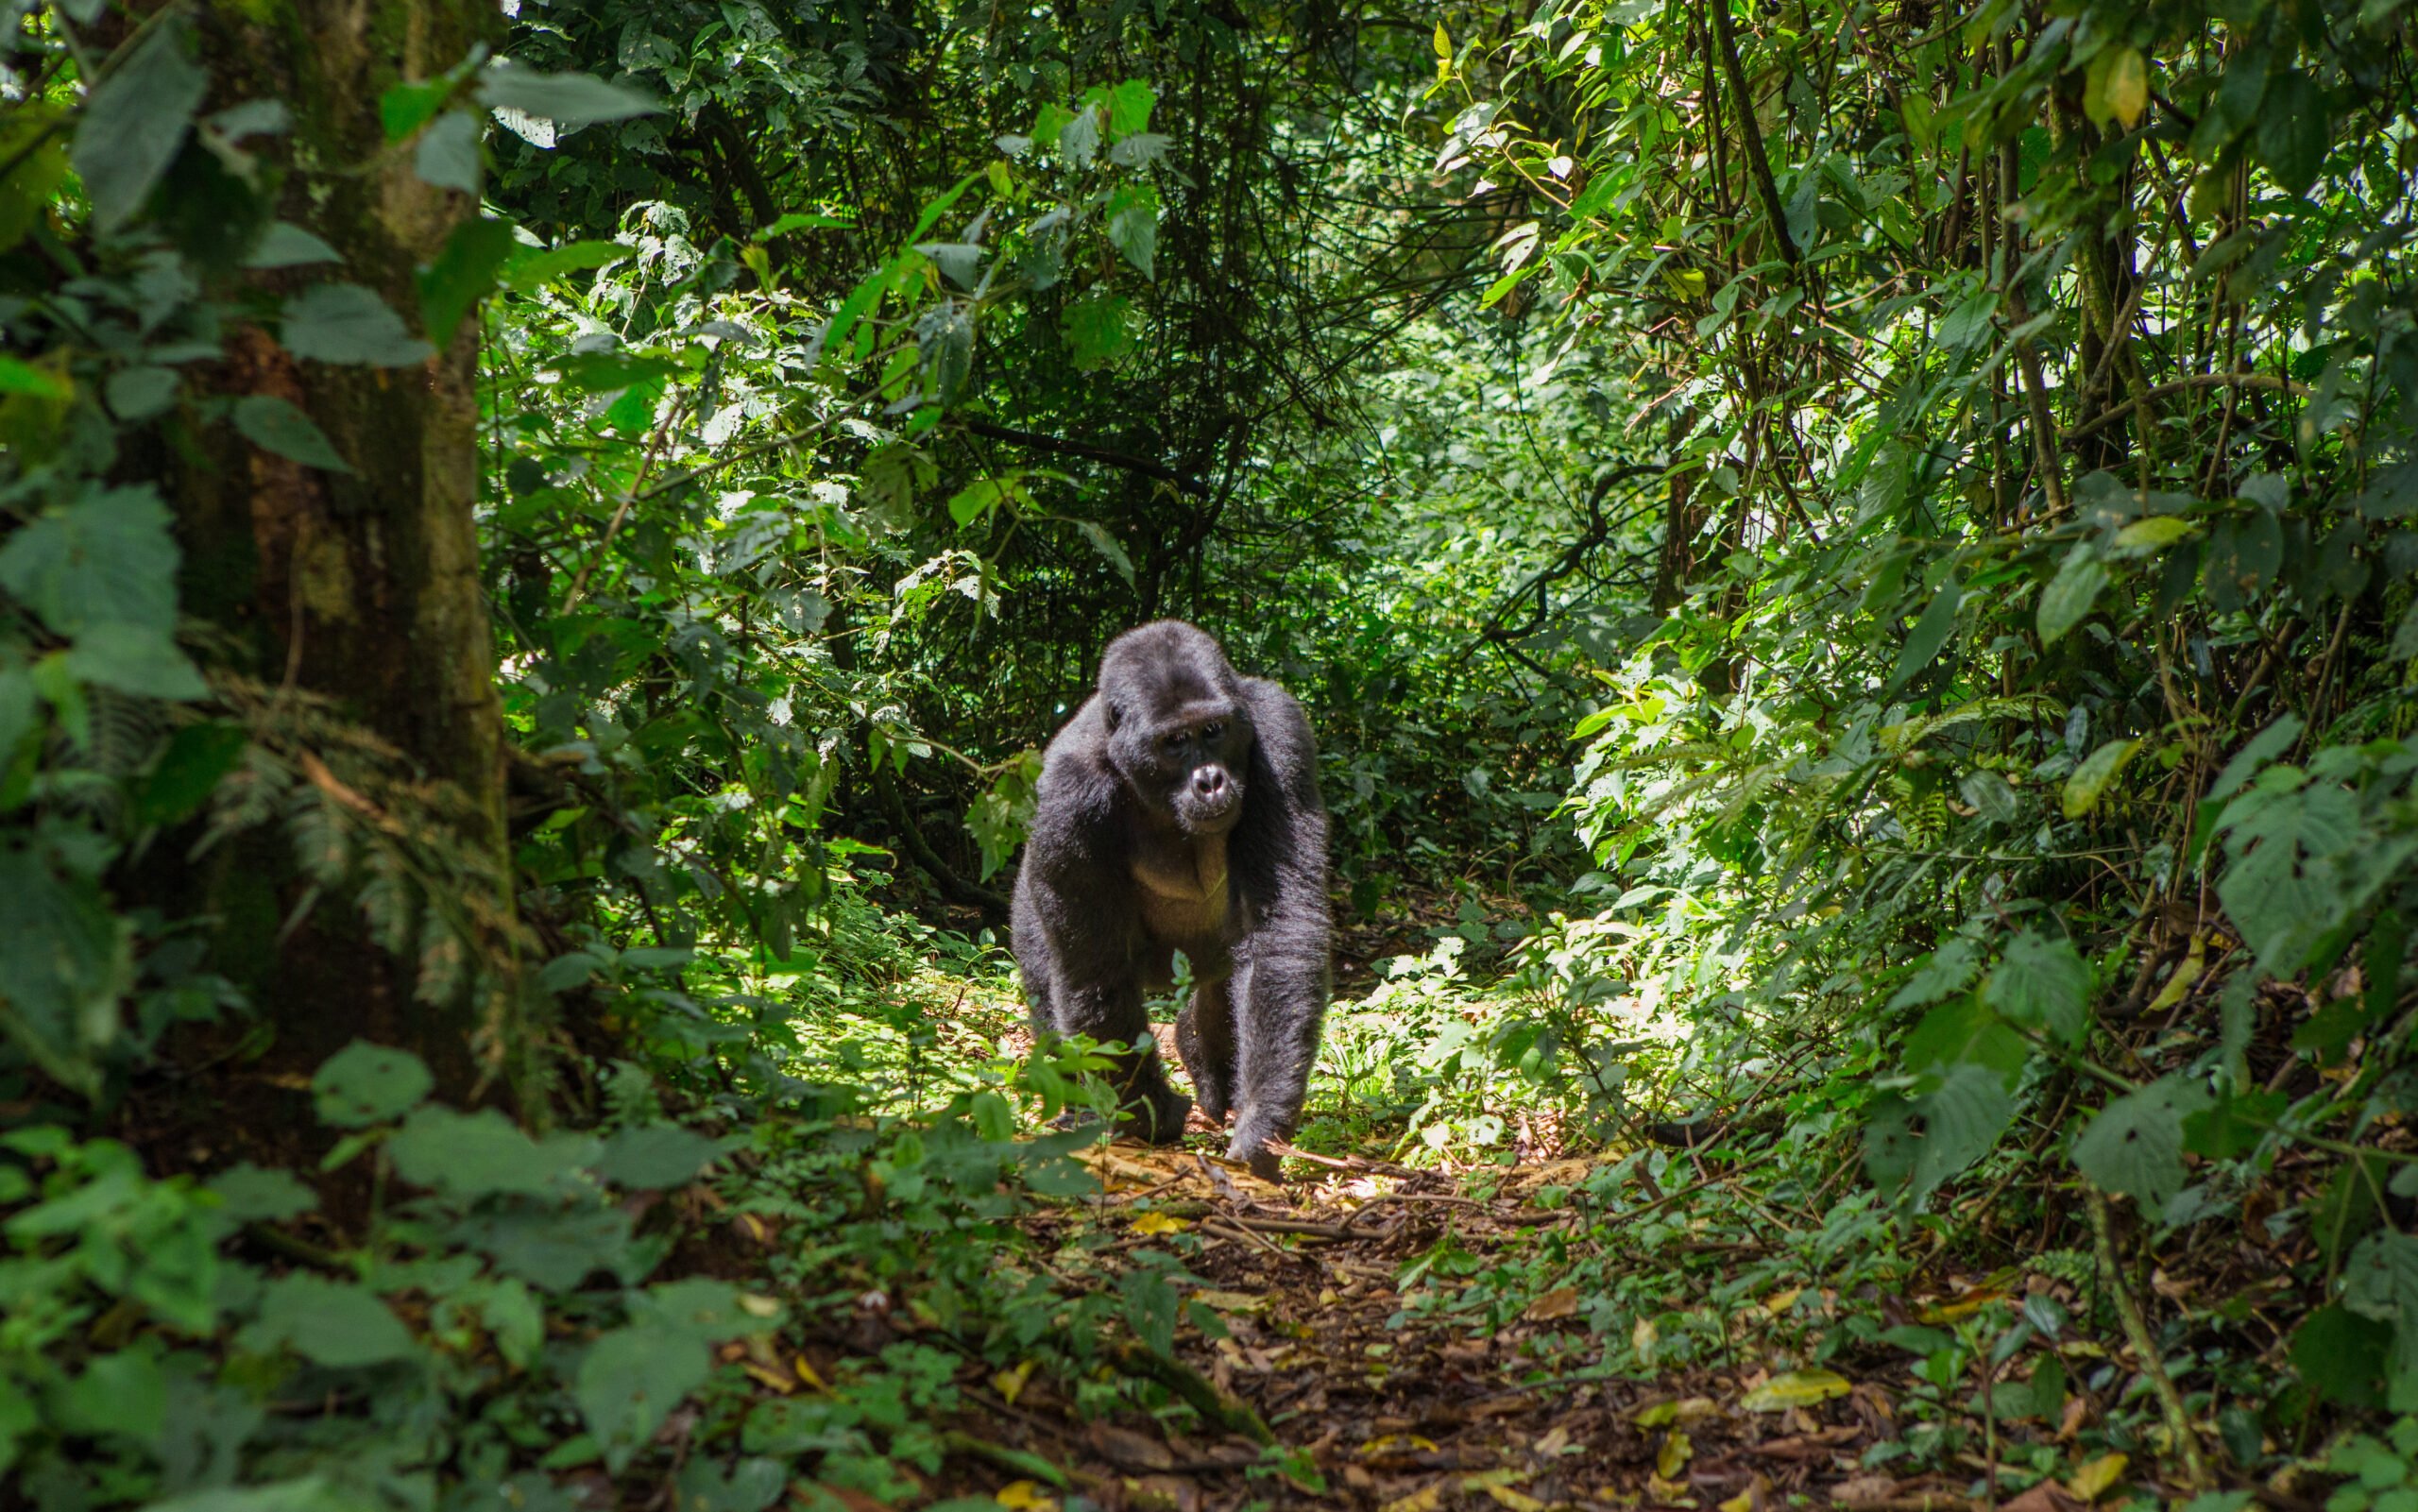 Gorillas in the Mist in Rwanda